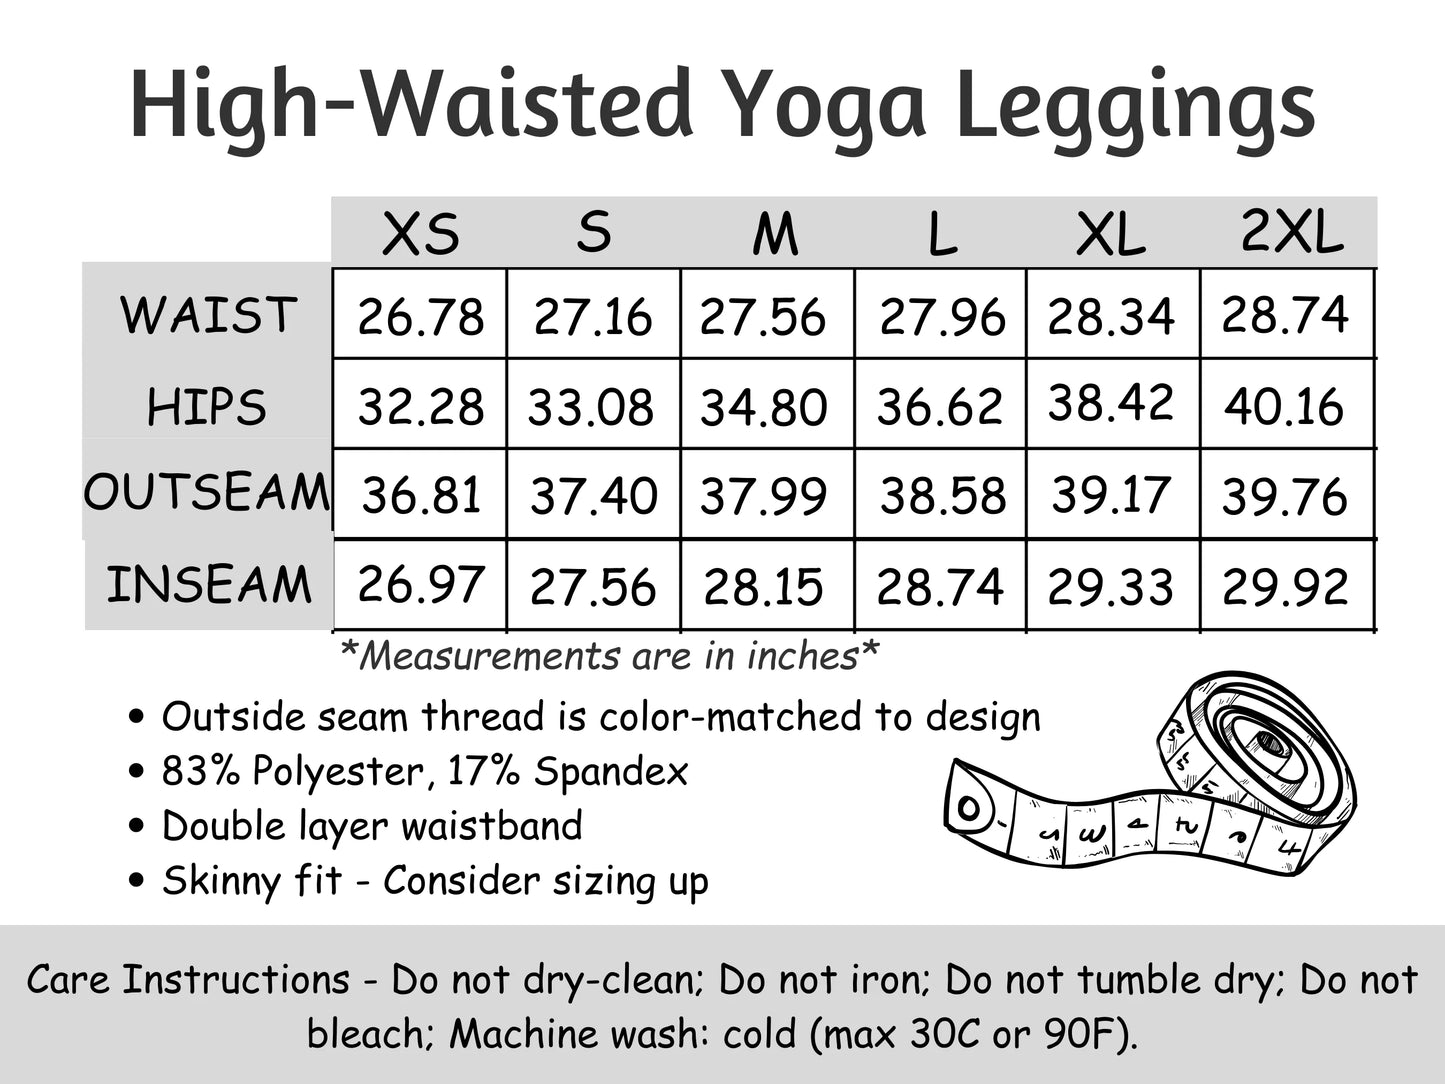 KMW Sleek - High Waisted Yoga Leggings